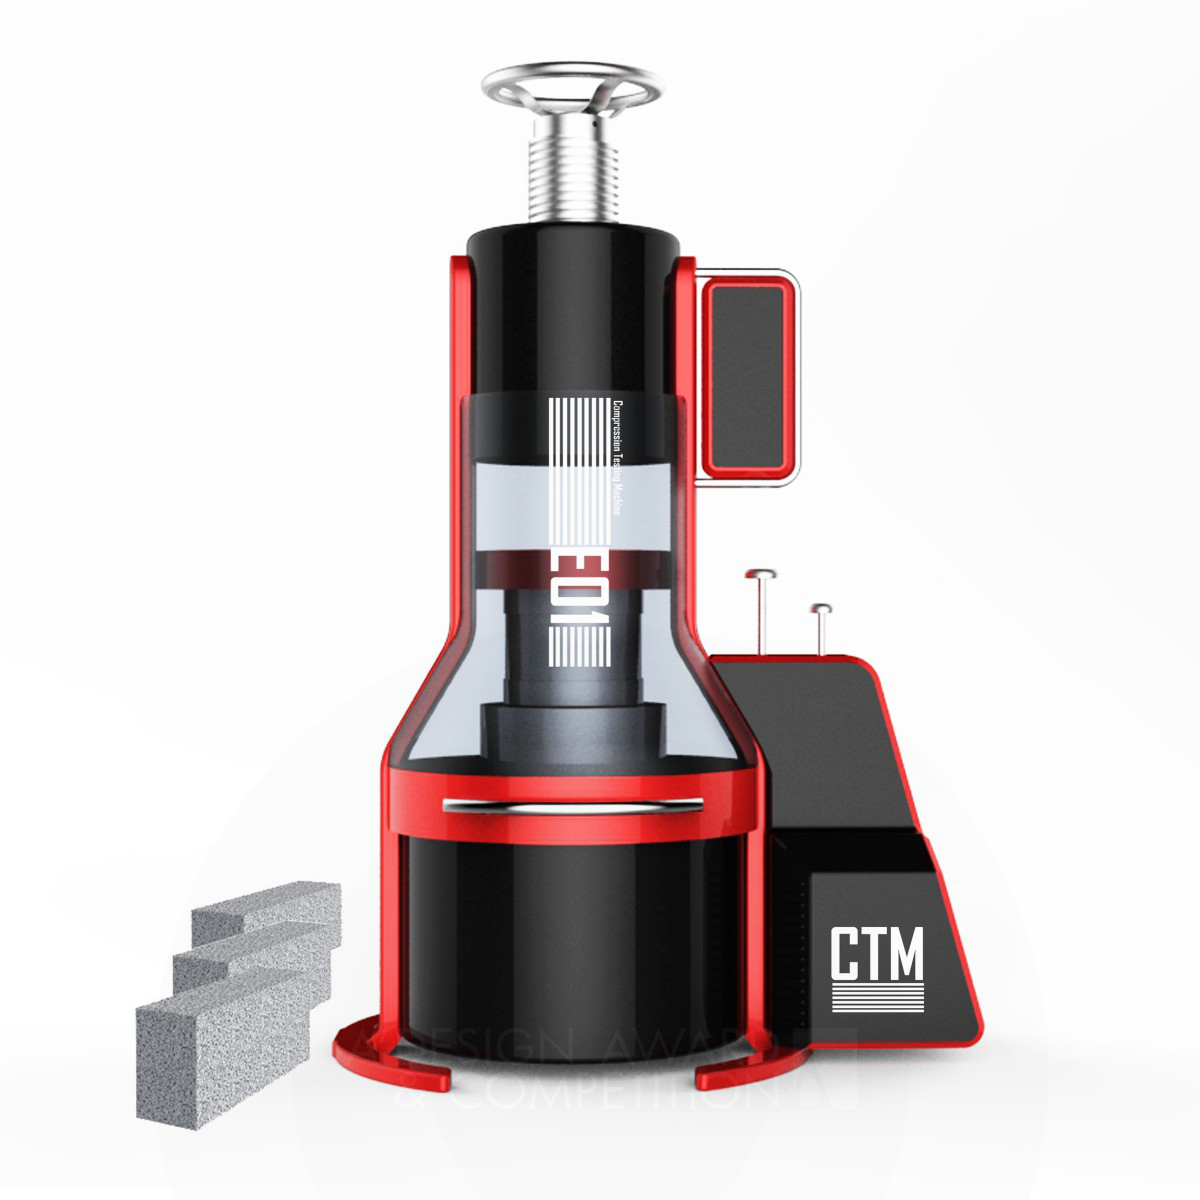 Ctm <b>Compression Testing Equipment